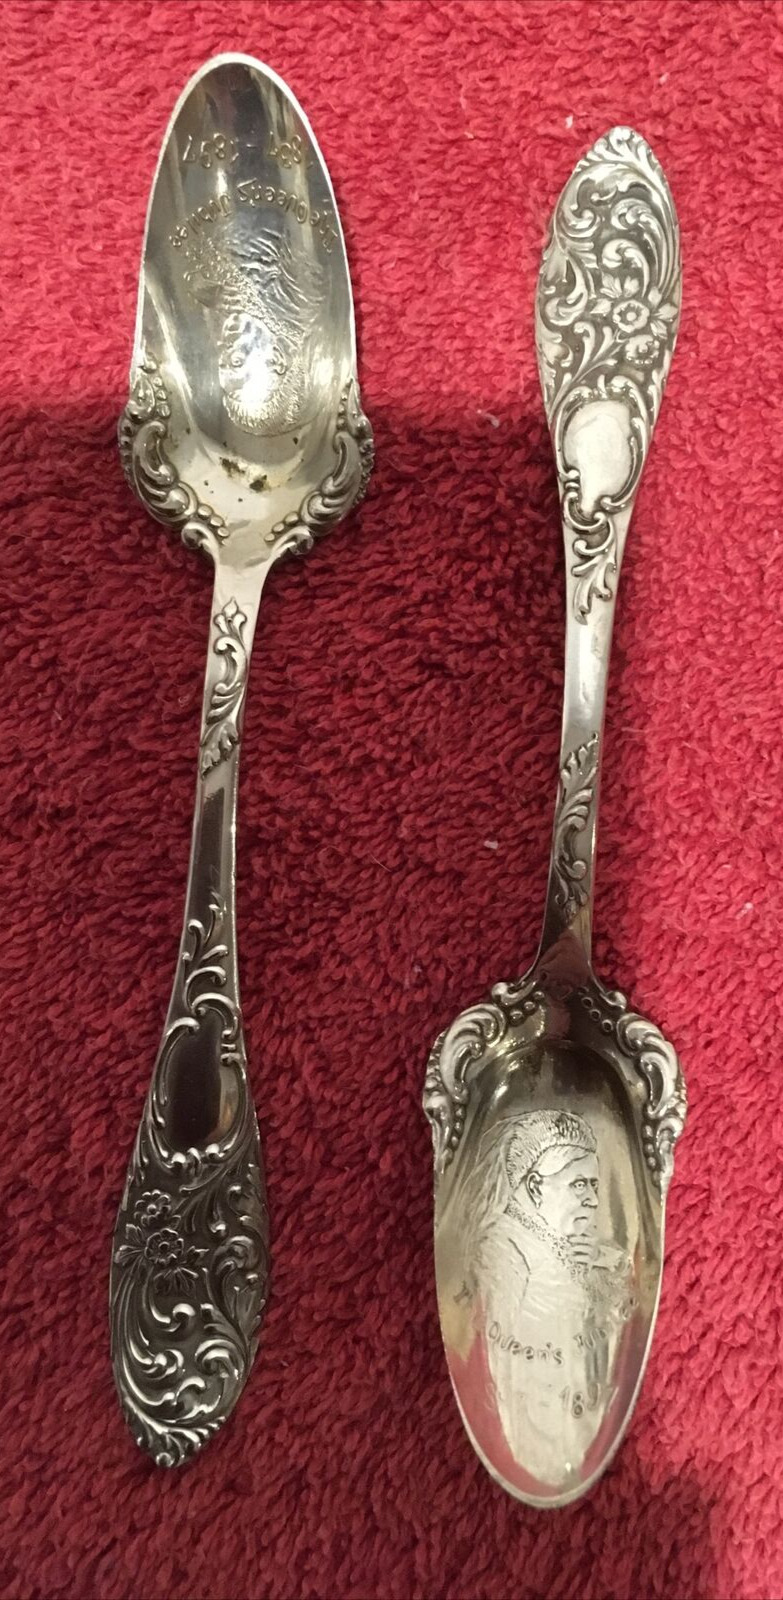 Norman MFG Co A1 SilverPlate 2 Fruit Spoon The Queens Jubilee 1837-1897 souvenir